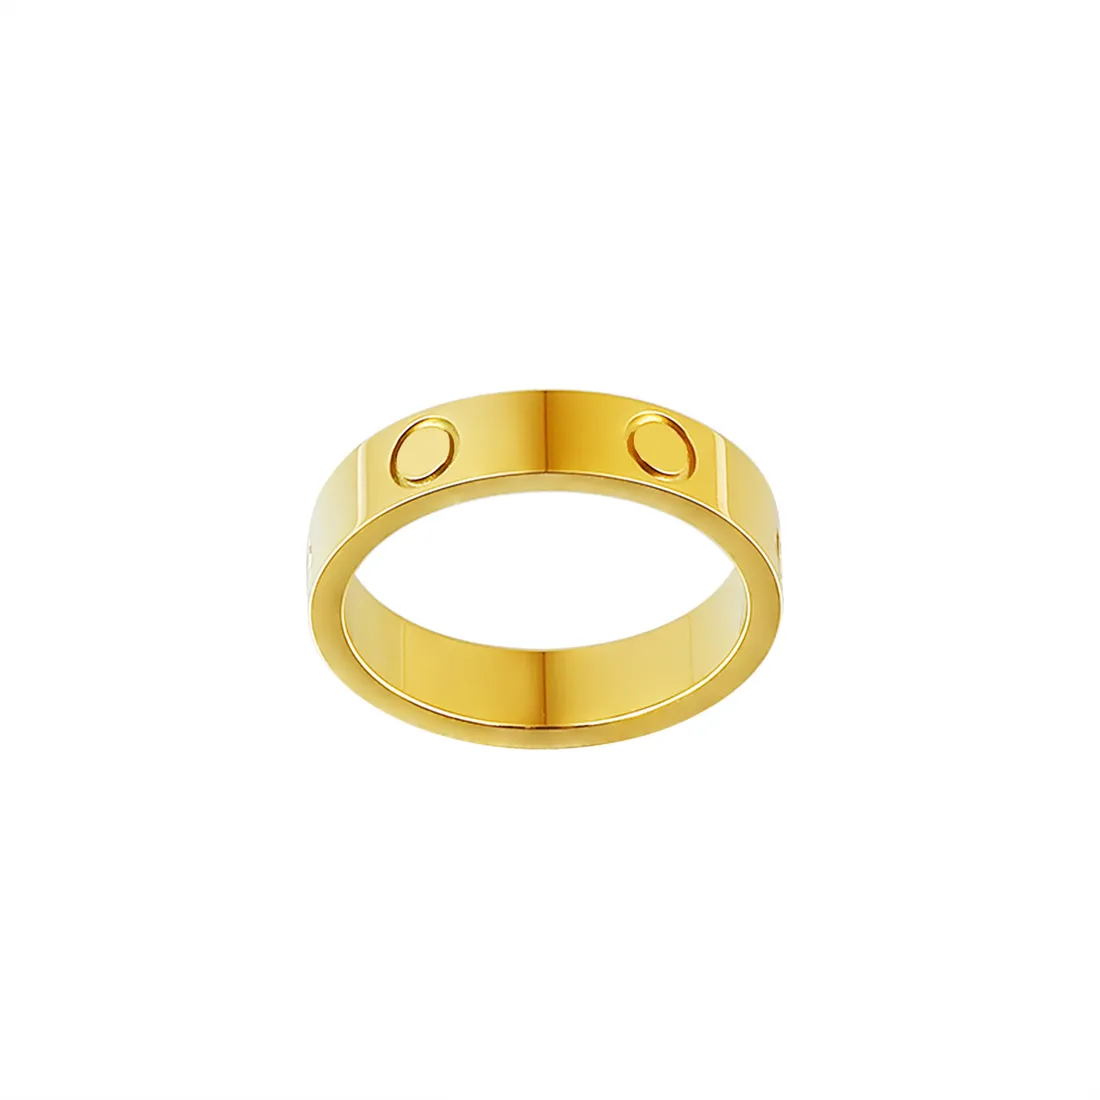 Luxury rings for women: eternity rings, ring styles- Cartier